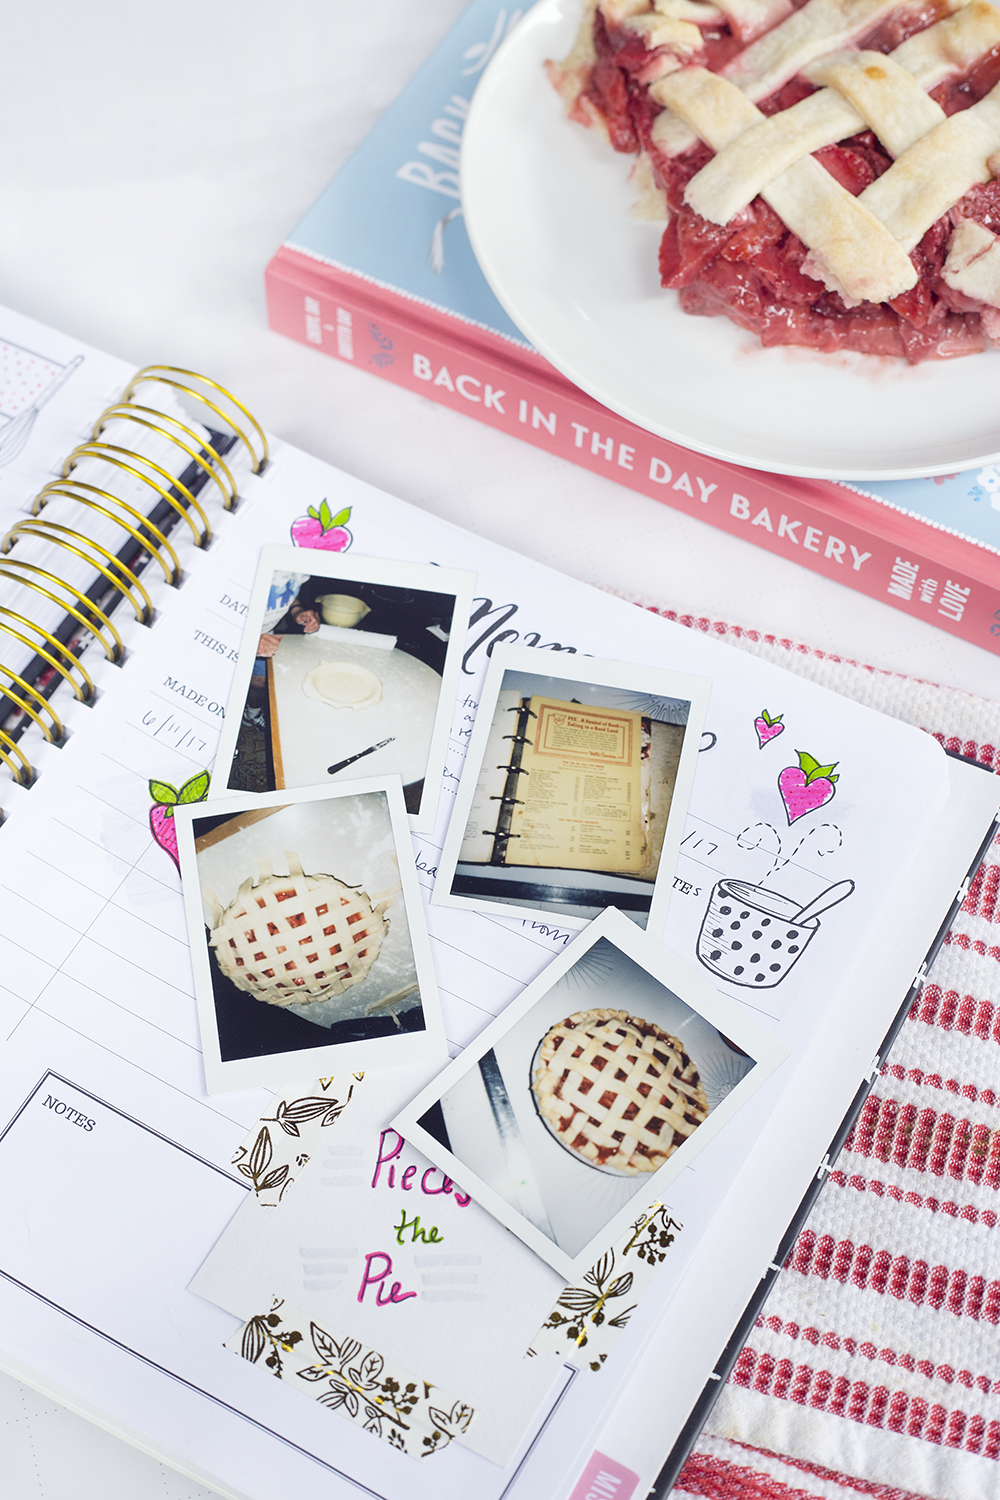 keepsake kitchen diary pocket | pie recipe | scrapbooking